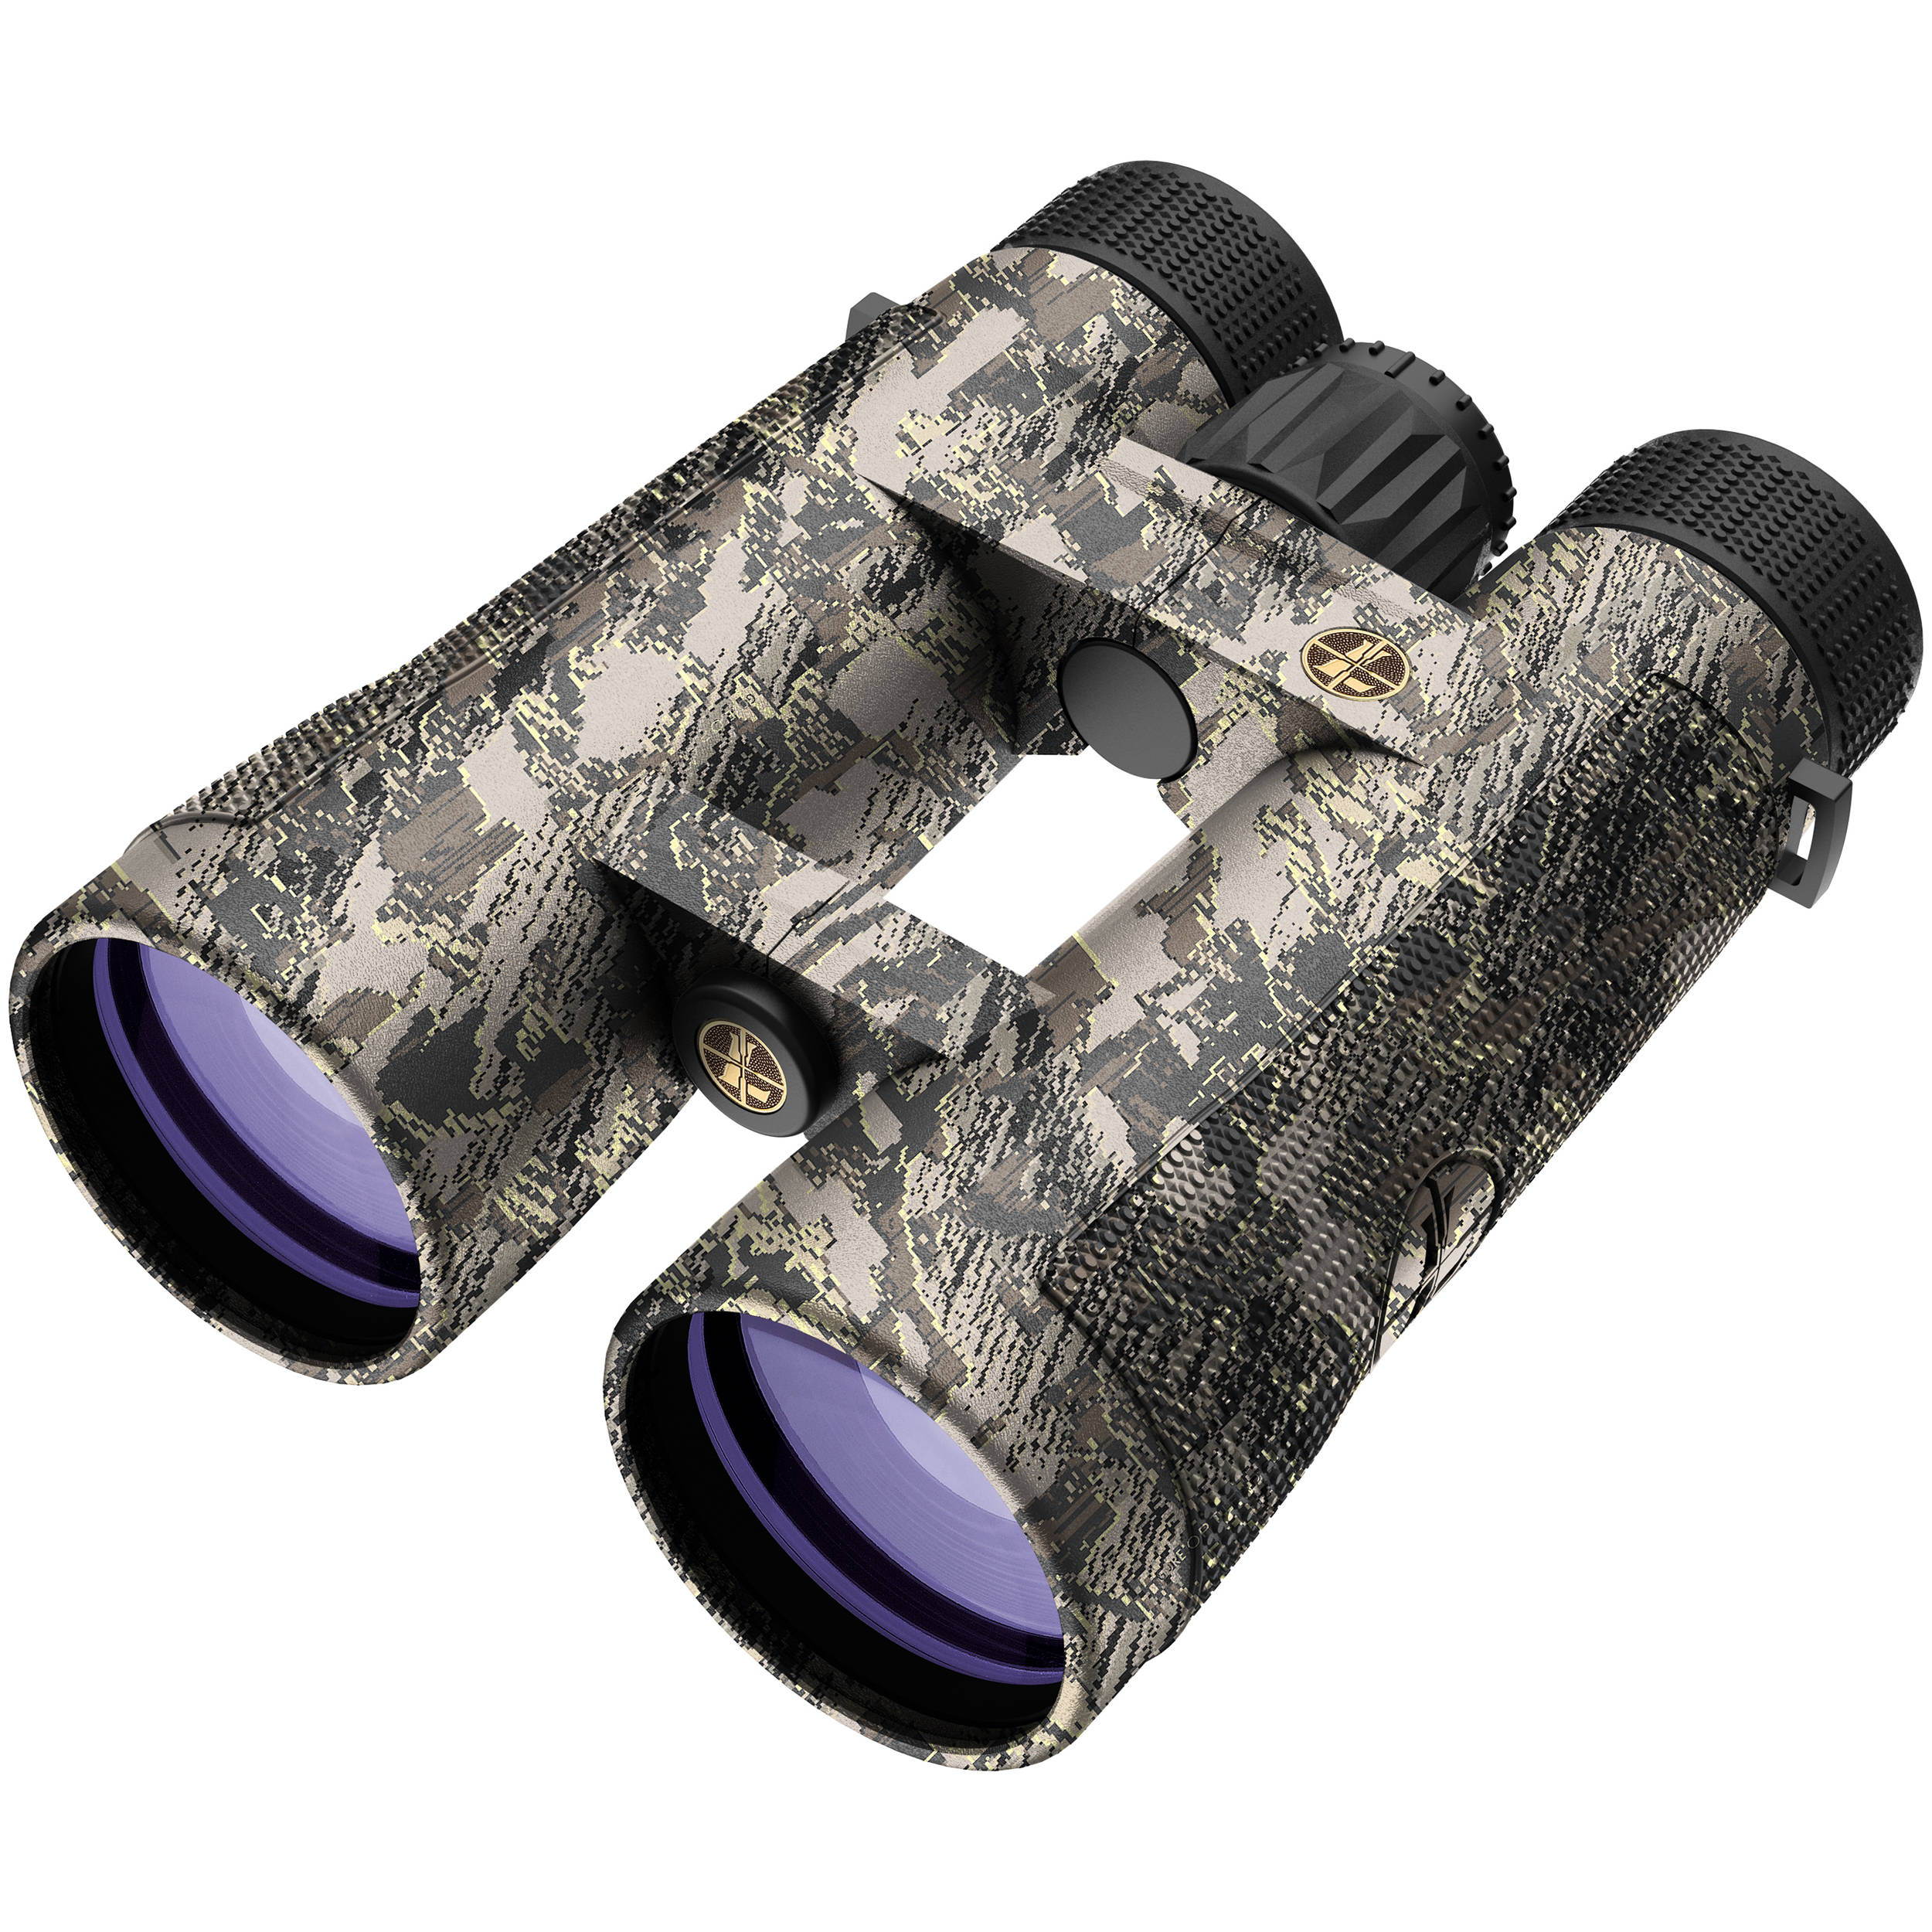 Leupold Binocular Bx4 Progde 10X50 Soc Pro Guide Hd|Sitka Open Cntry Lp172672